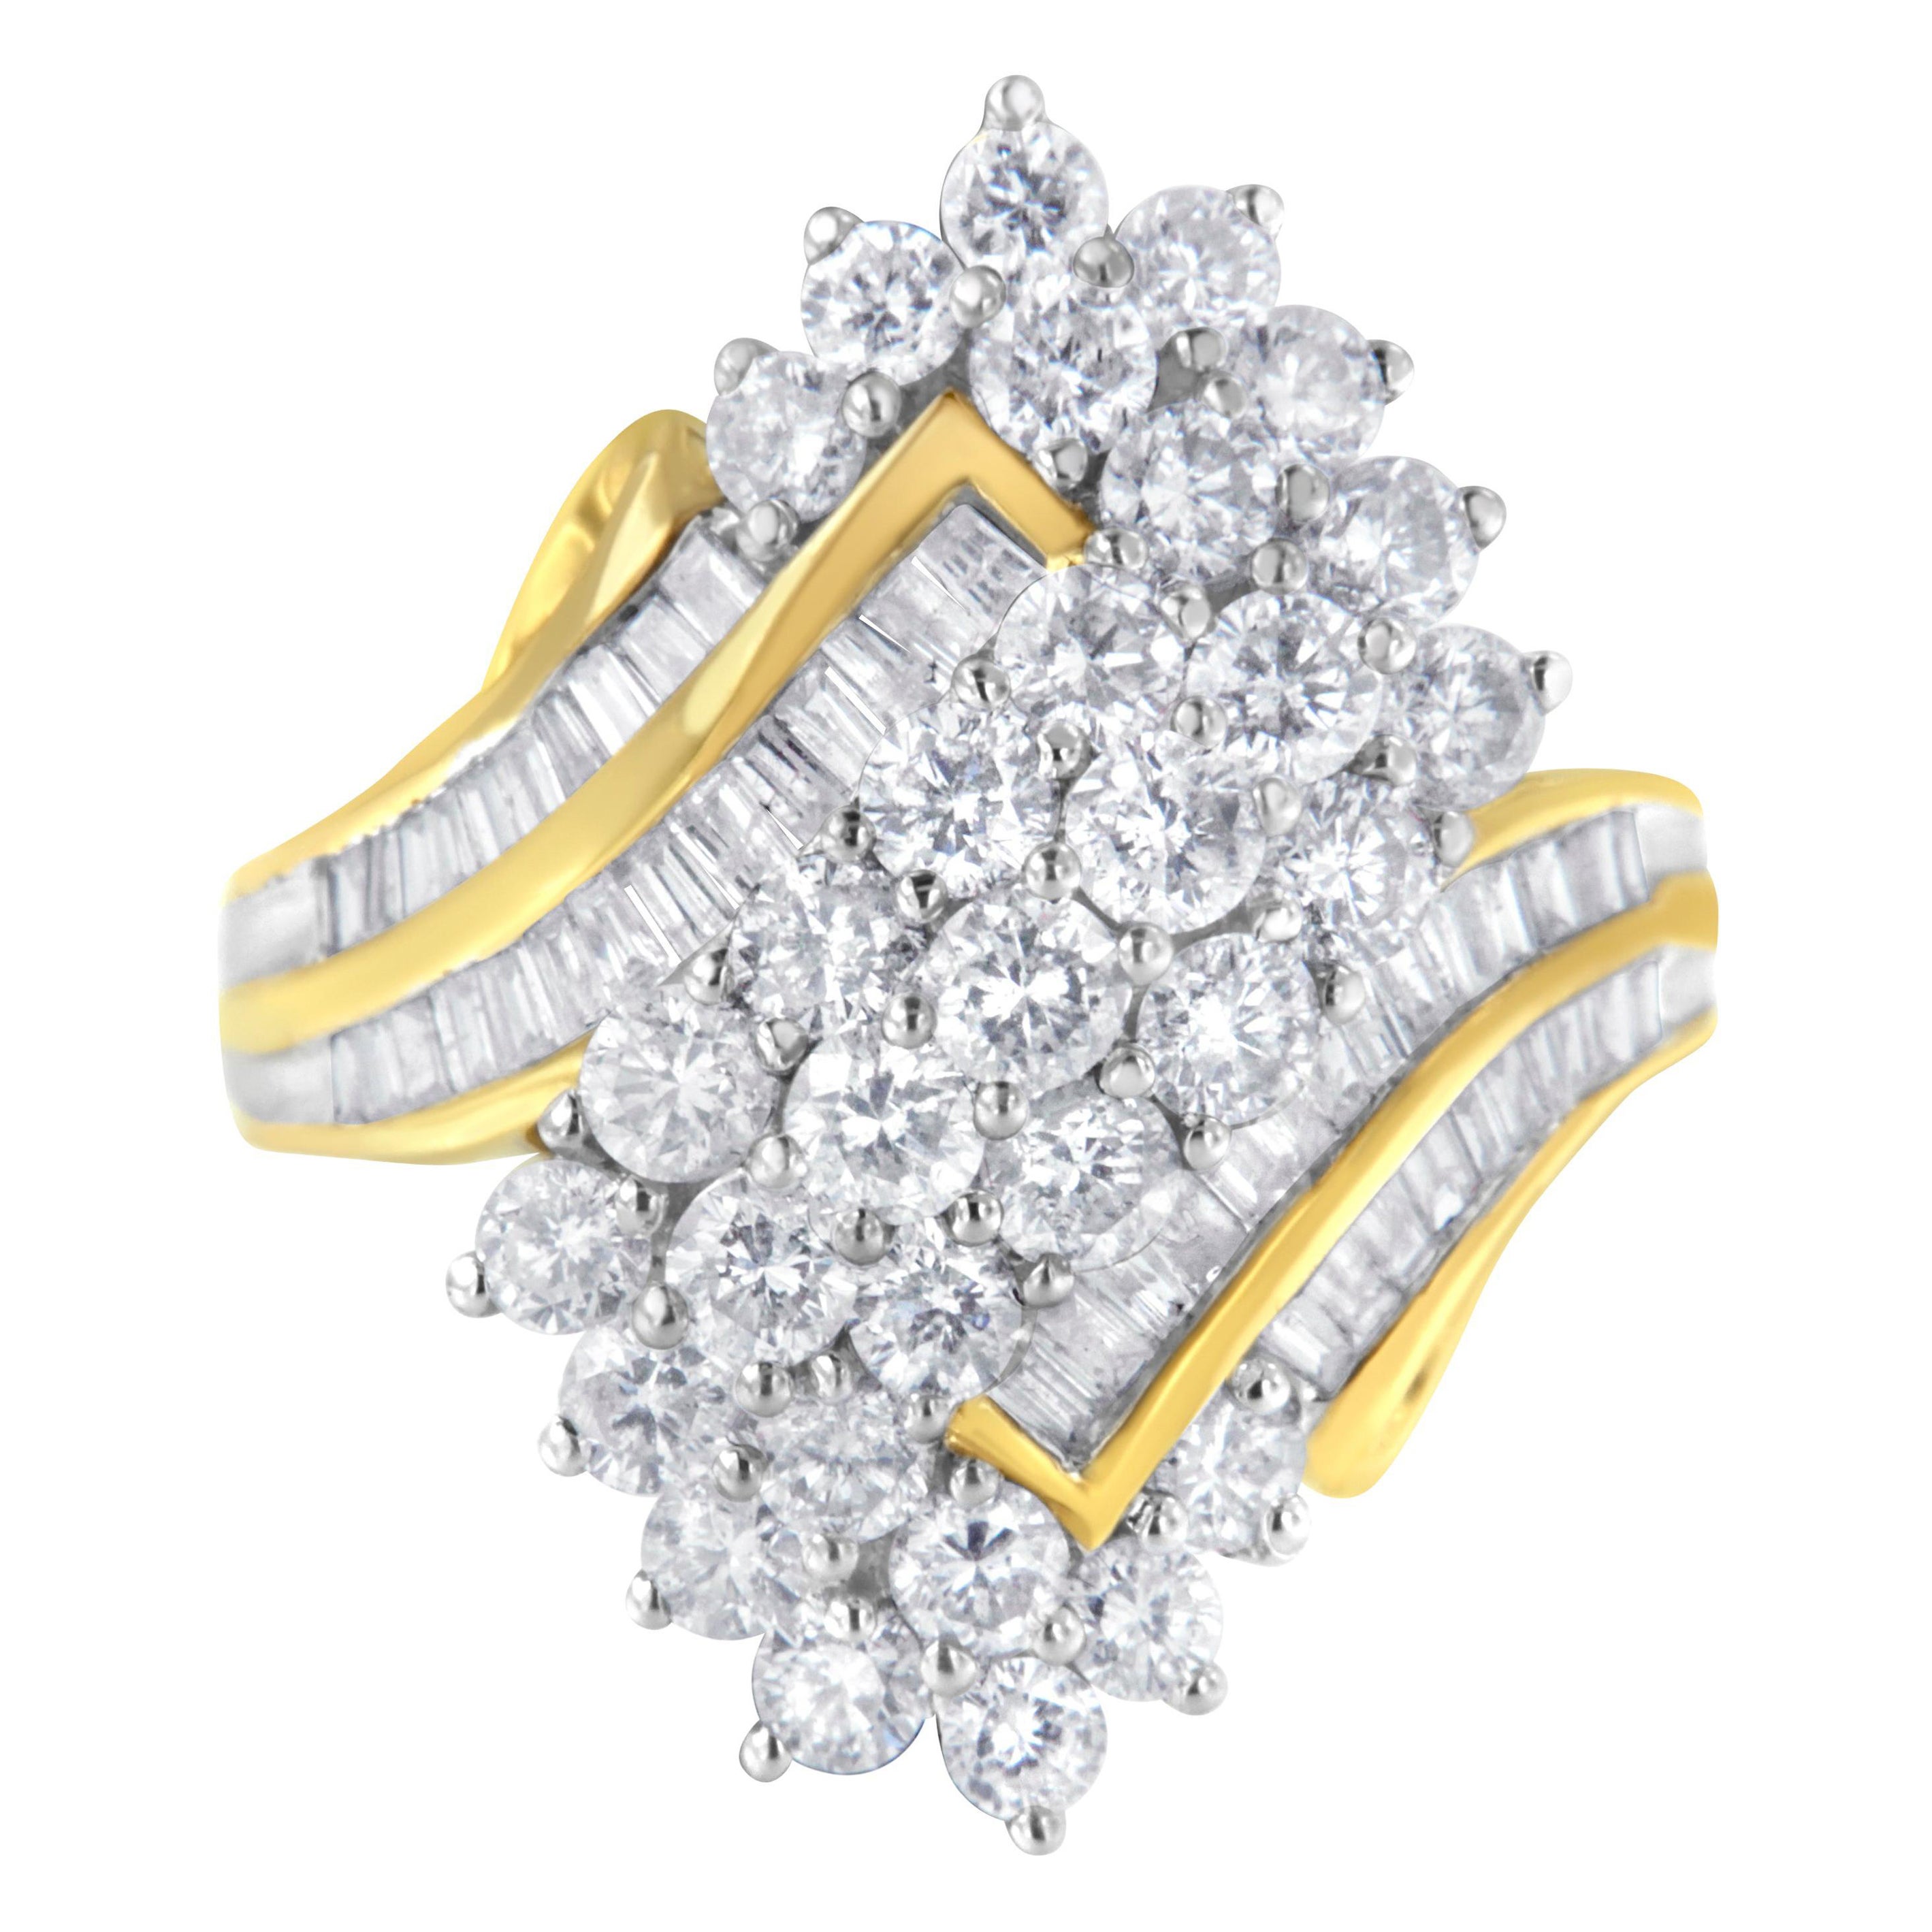 10K Yellow Gold 2 5/8 Carat Diamond Cluster Ring